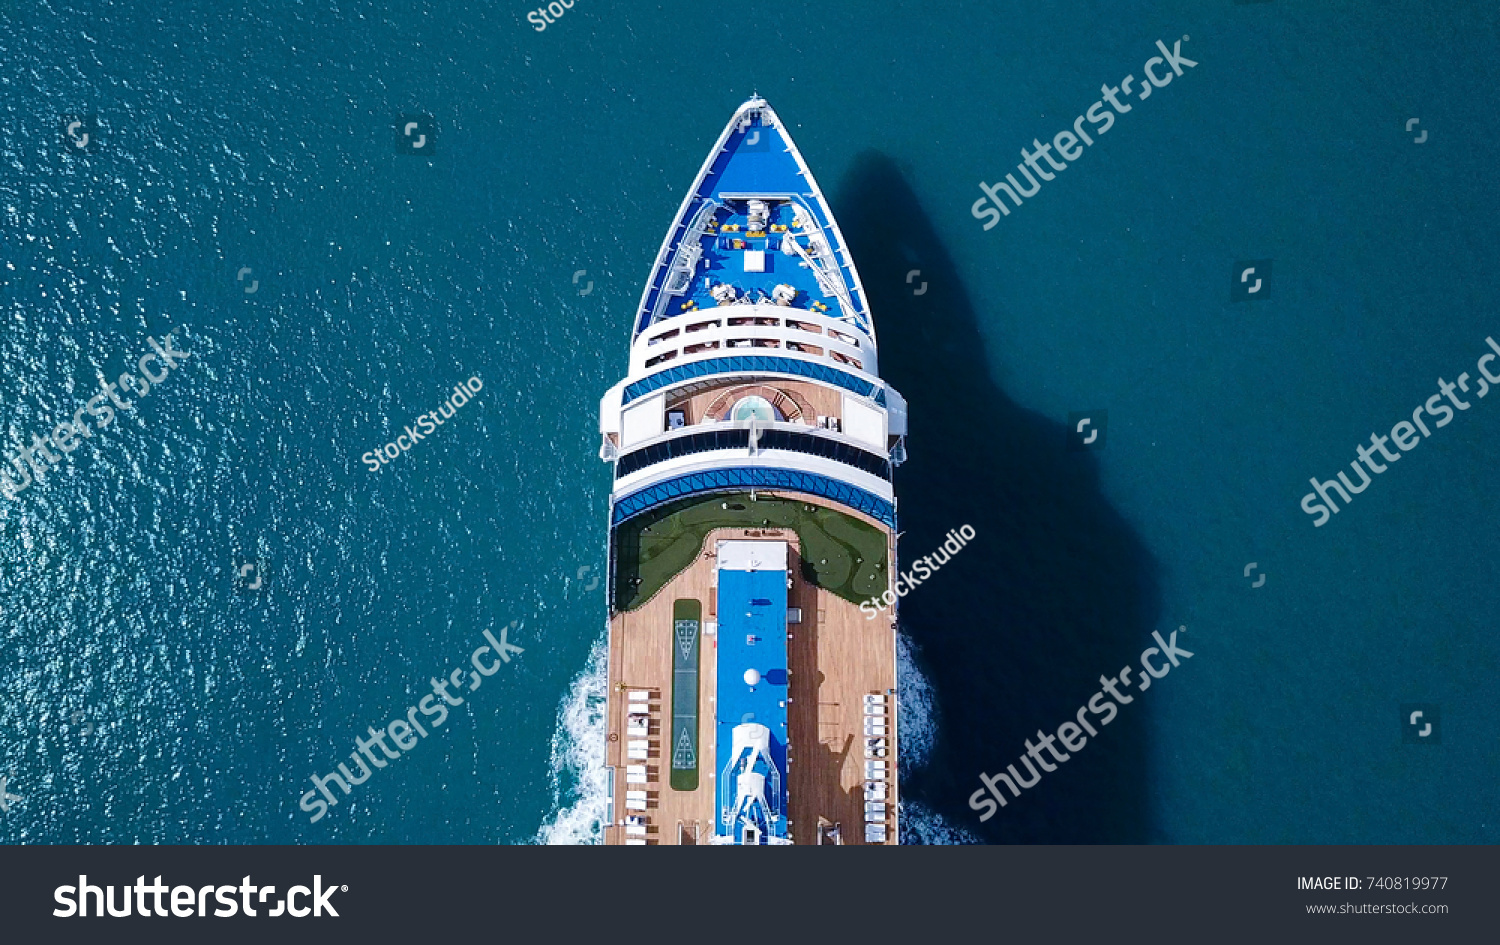 Large Cruise ship sailing across The Mediterranean sea - Aerial image #740819977